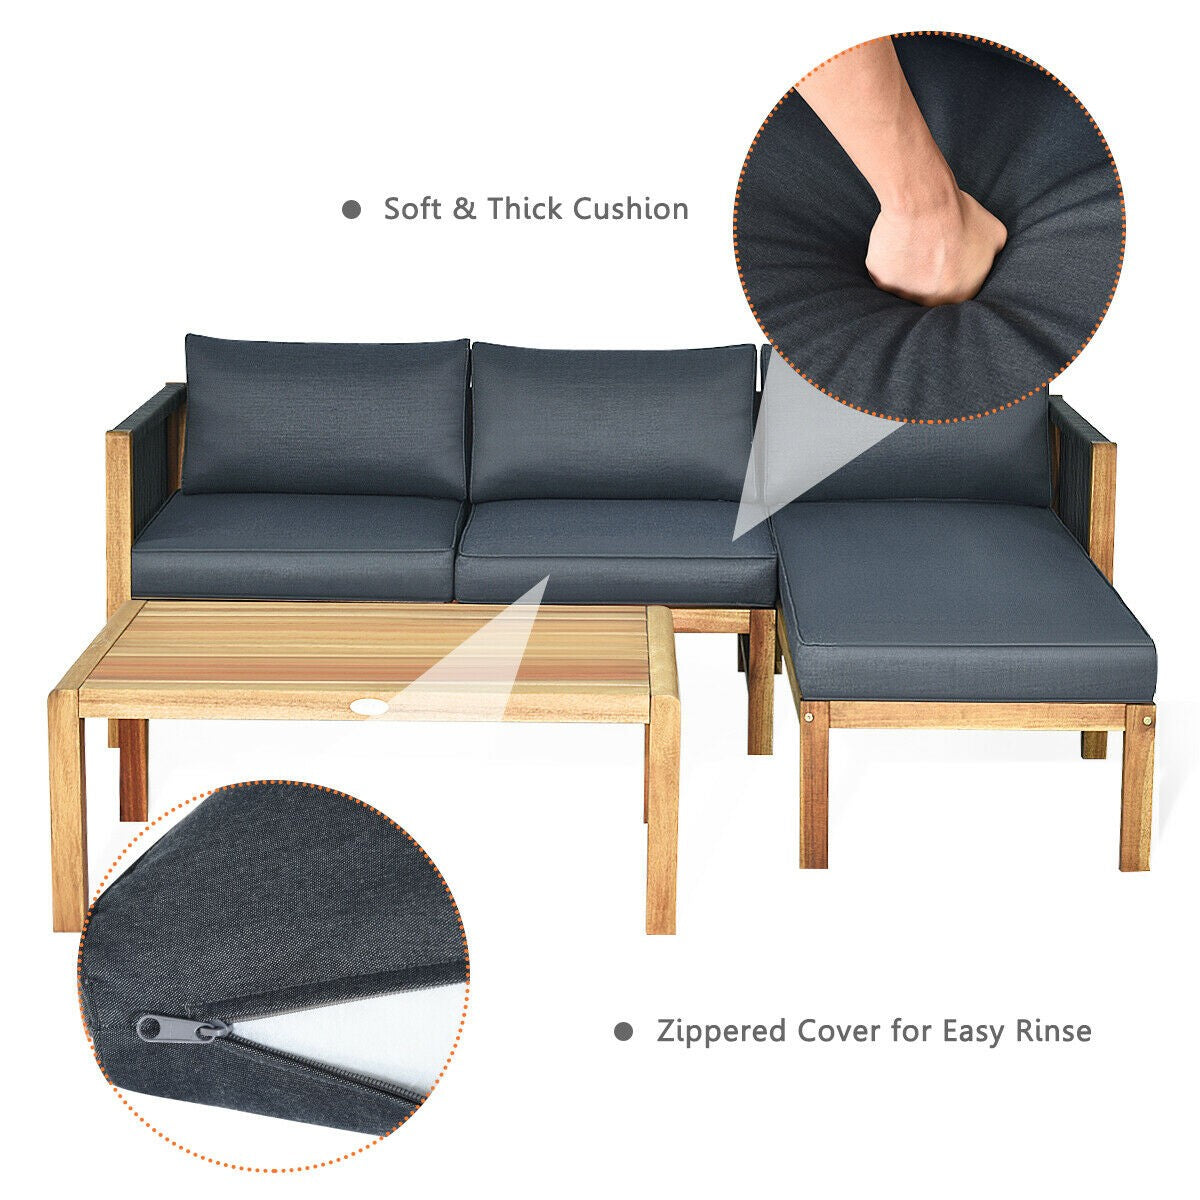 Giantex 3 Piece Outdoor Patio Furniture Set, Acacia Wood Sectional Sofa w/ Seat Cushions (Grey)